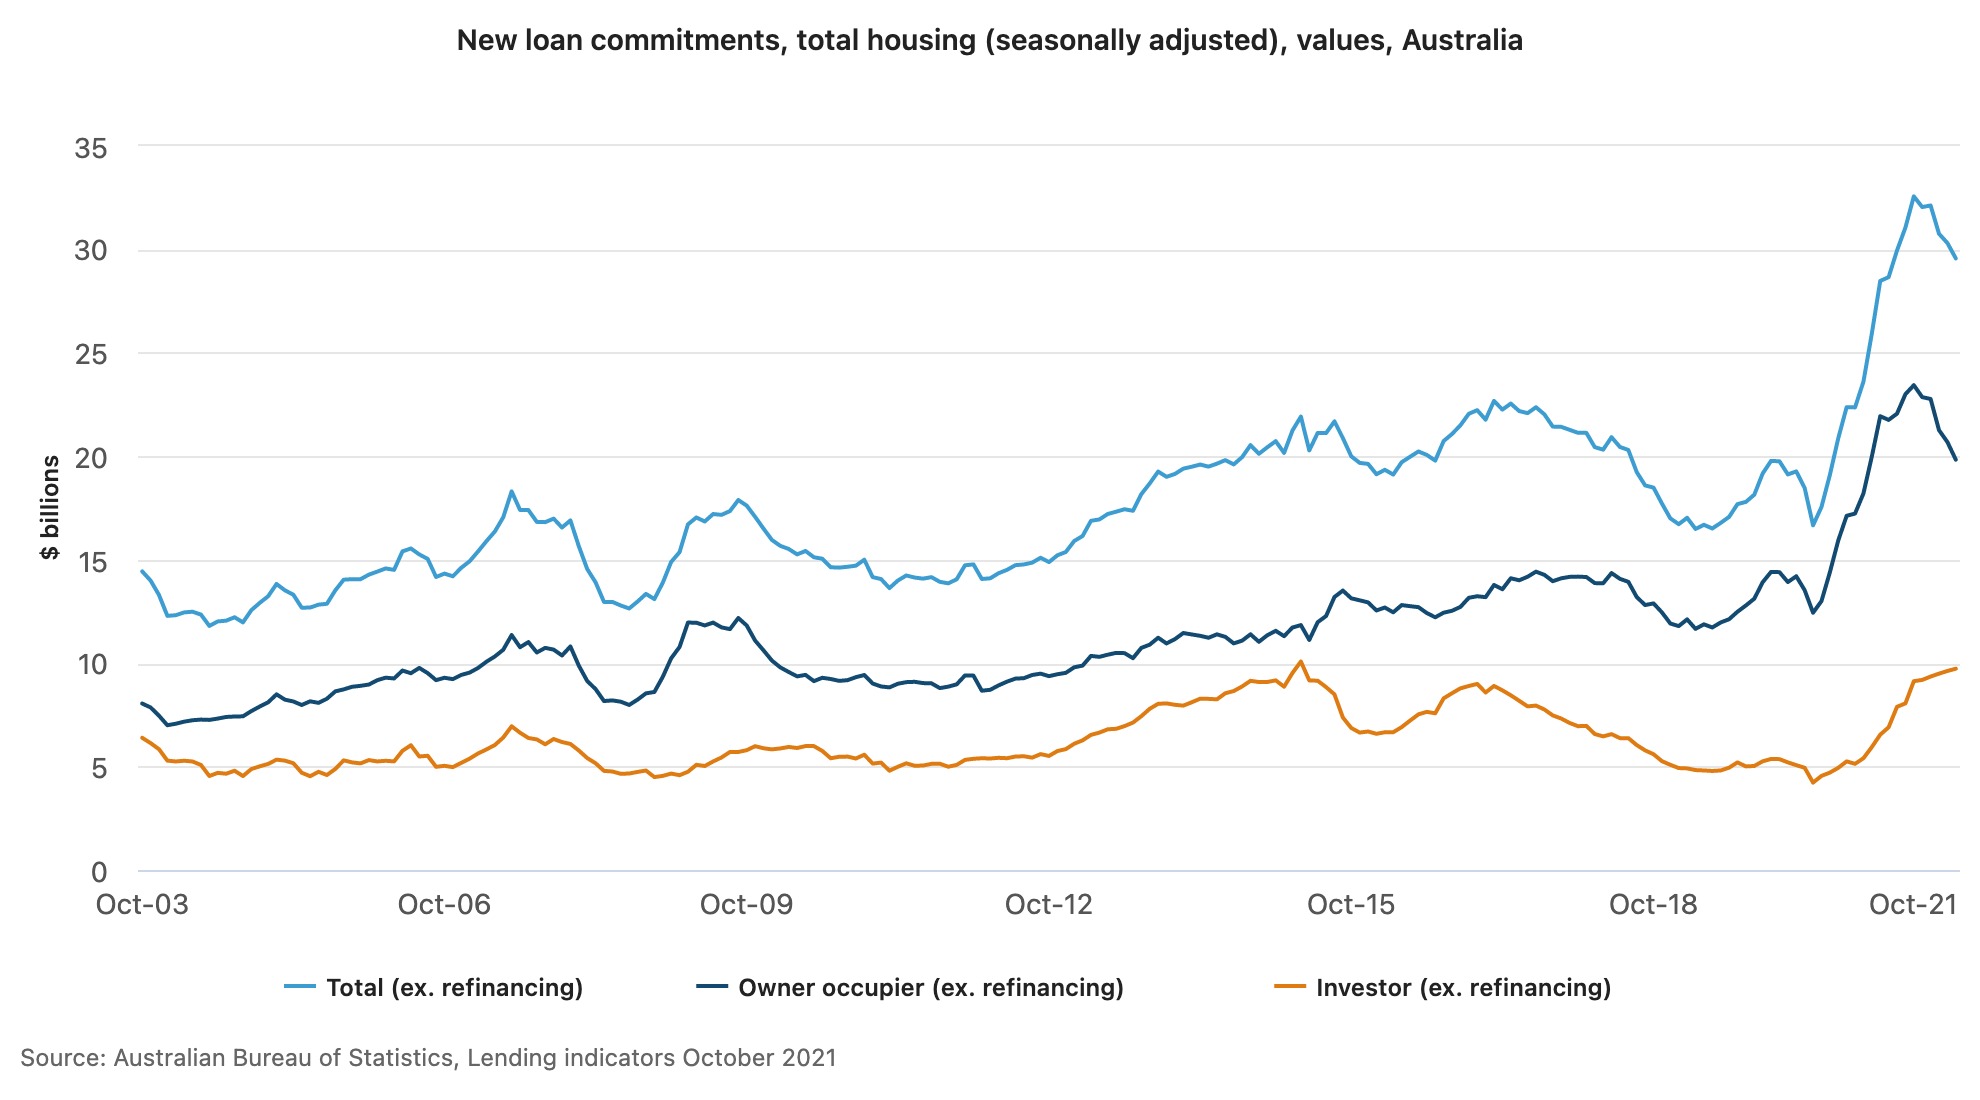 New-loan-commitments-total-housing-seasonally-adjusted-values-Australia-1